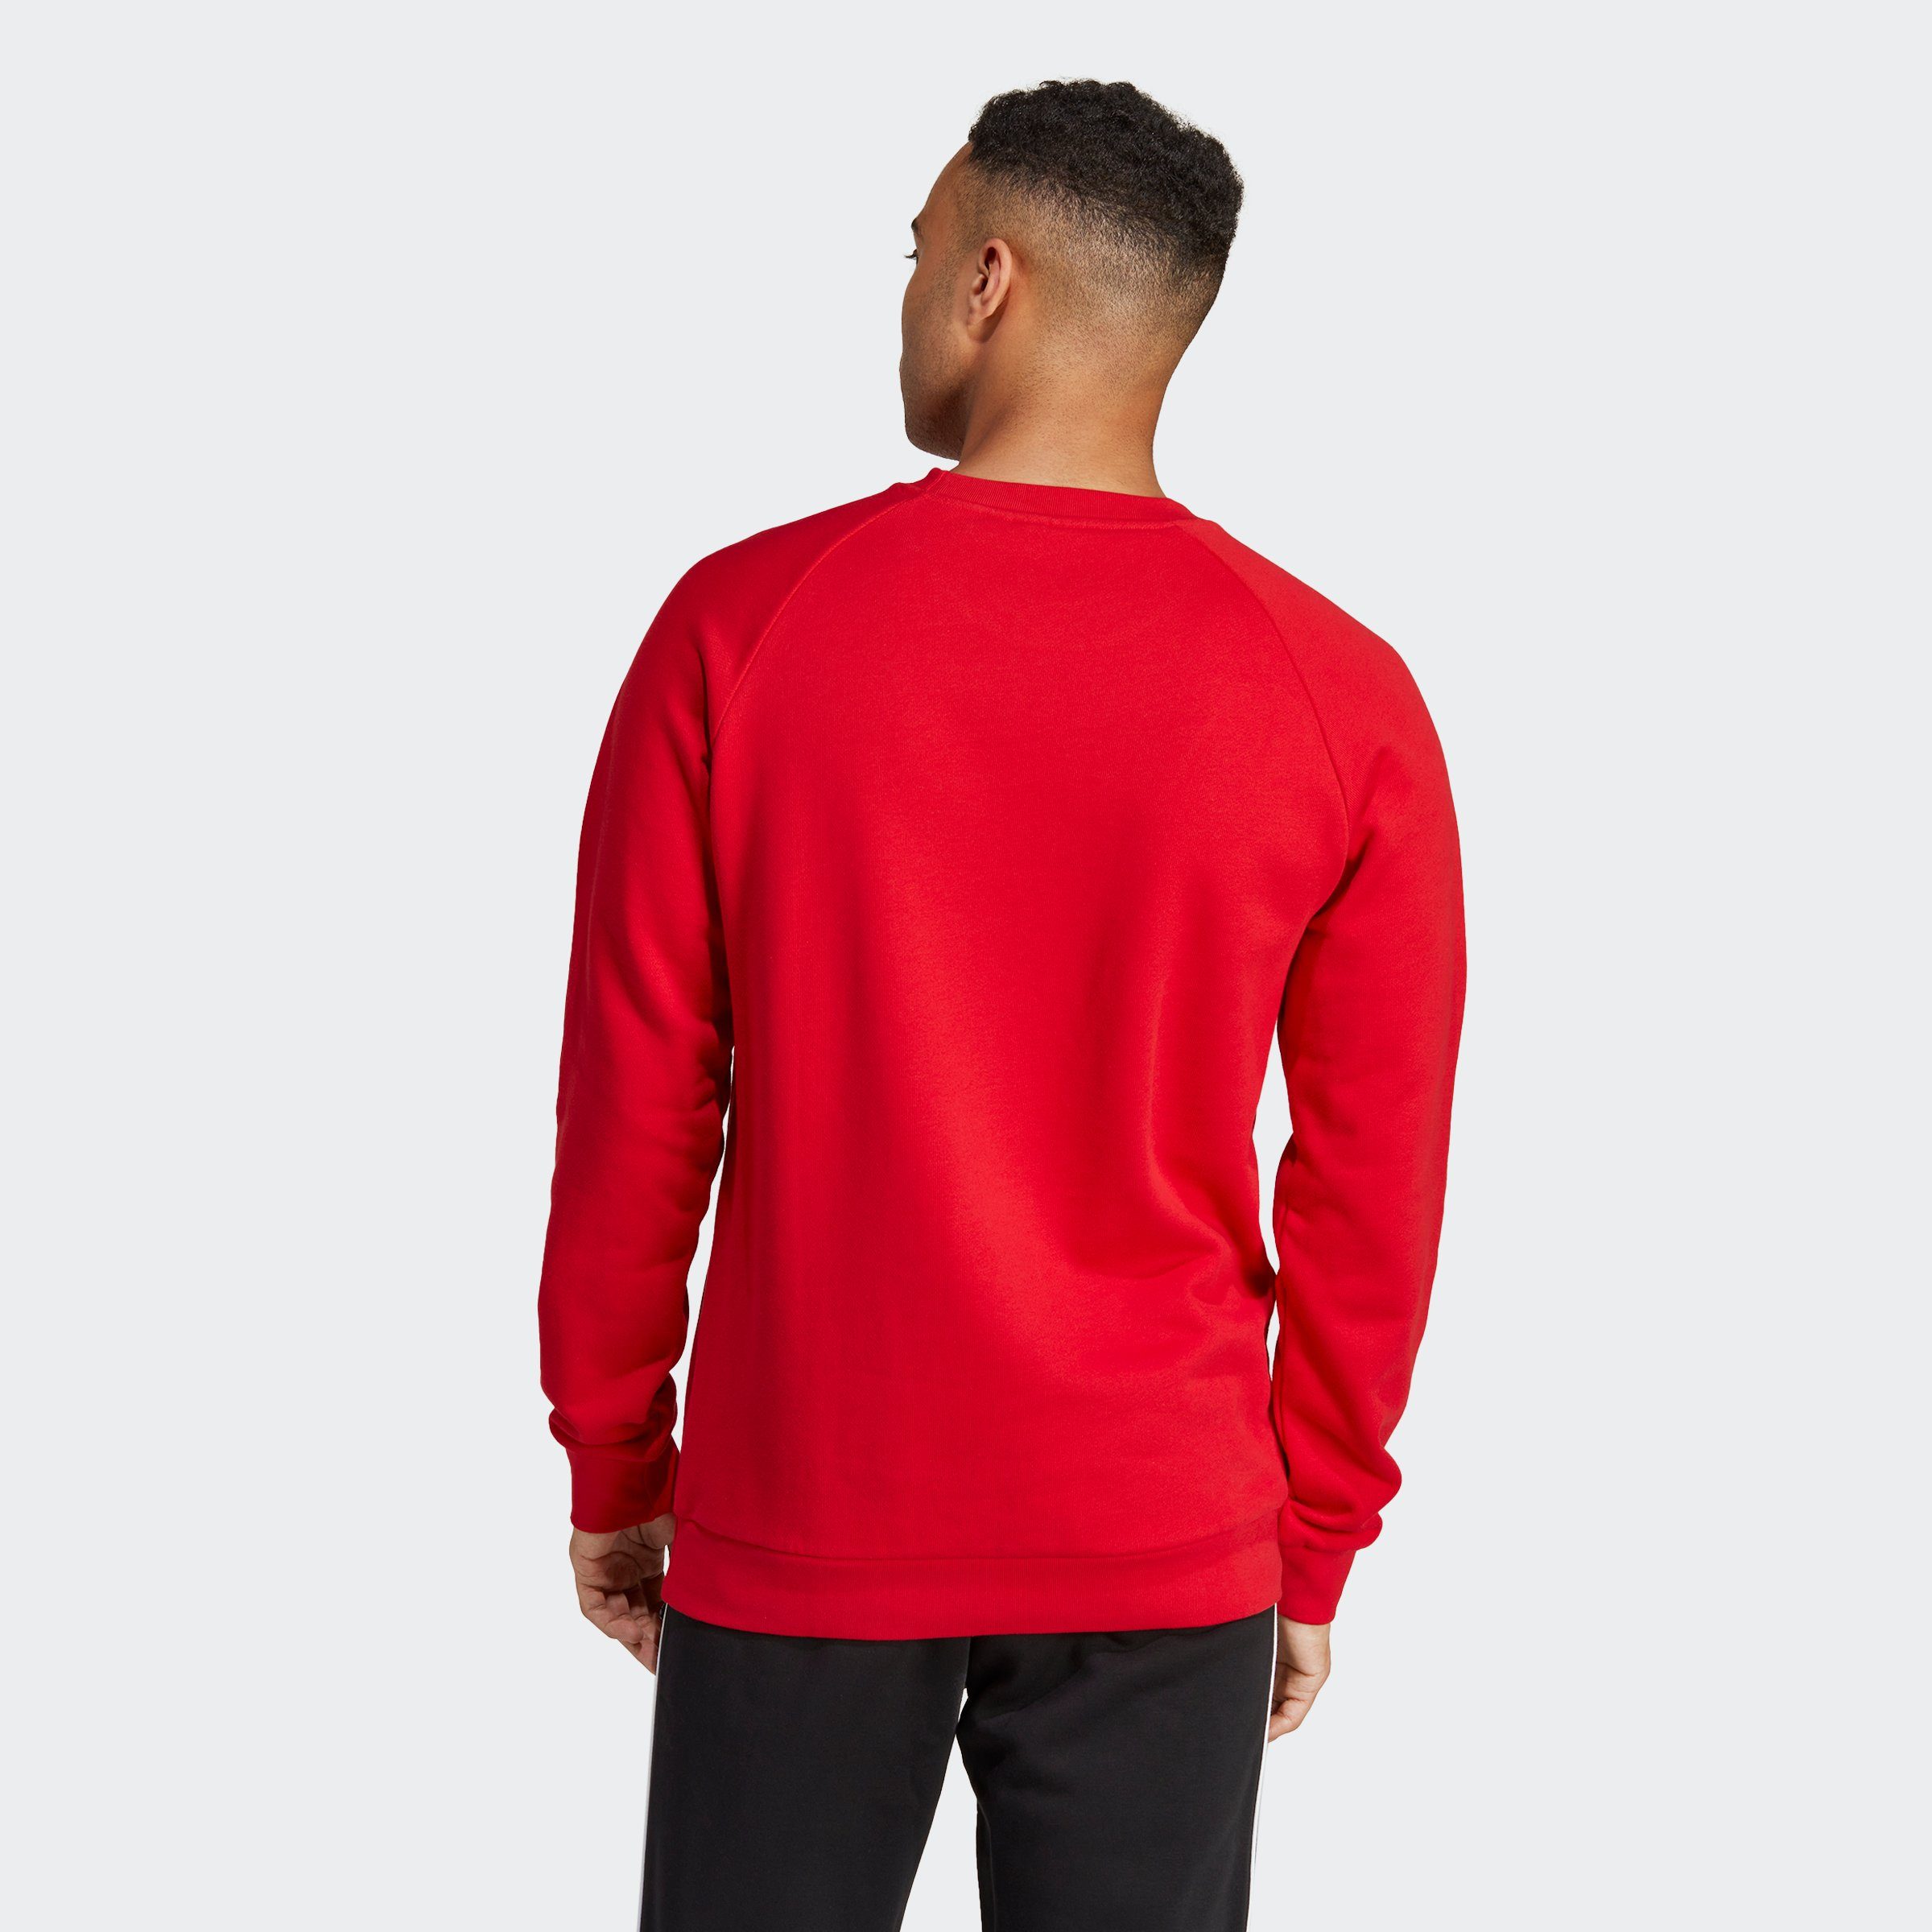 Sweatshirt Scarlet Originals adidas Better ADICOLOR TREFOIL CLASSICS